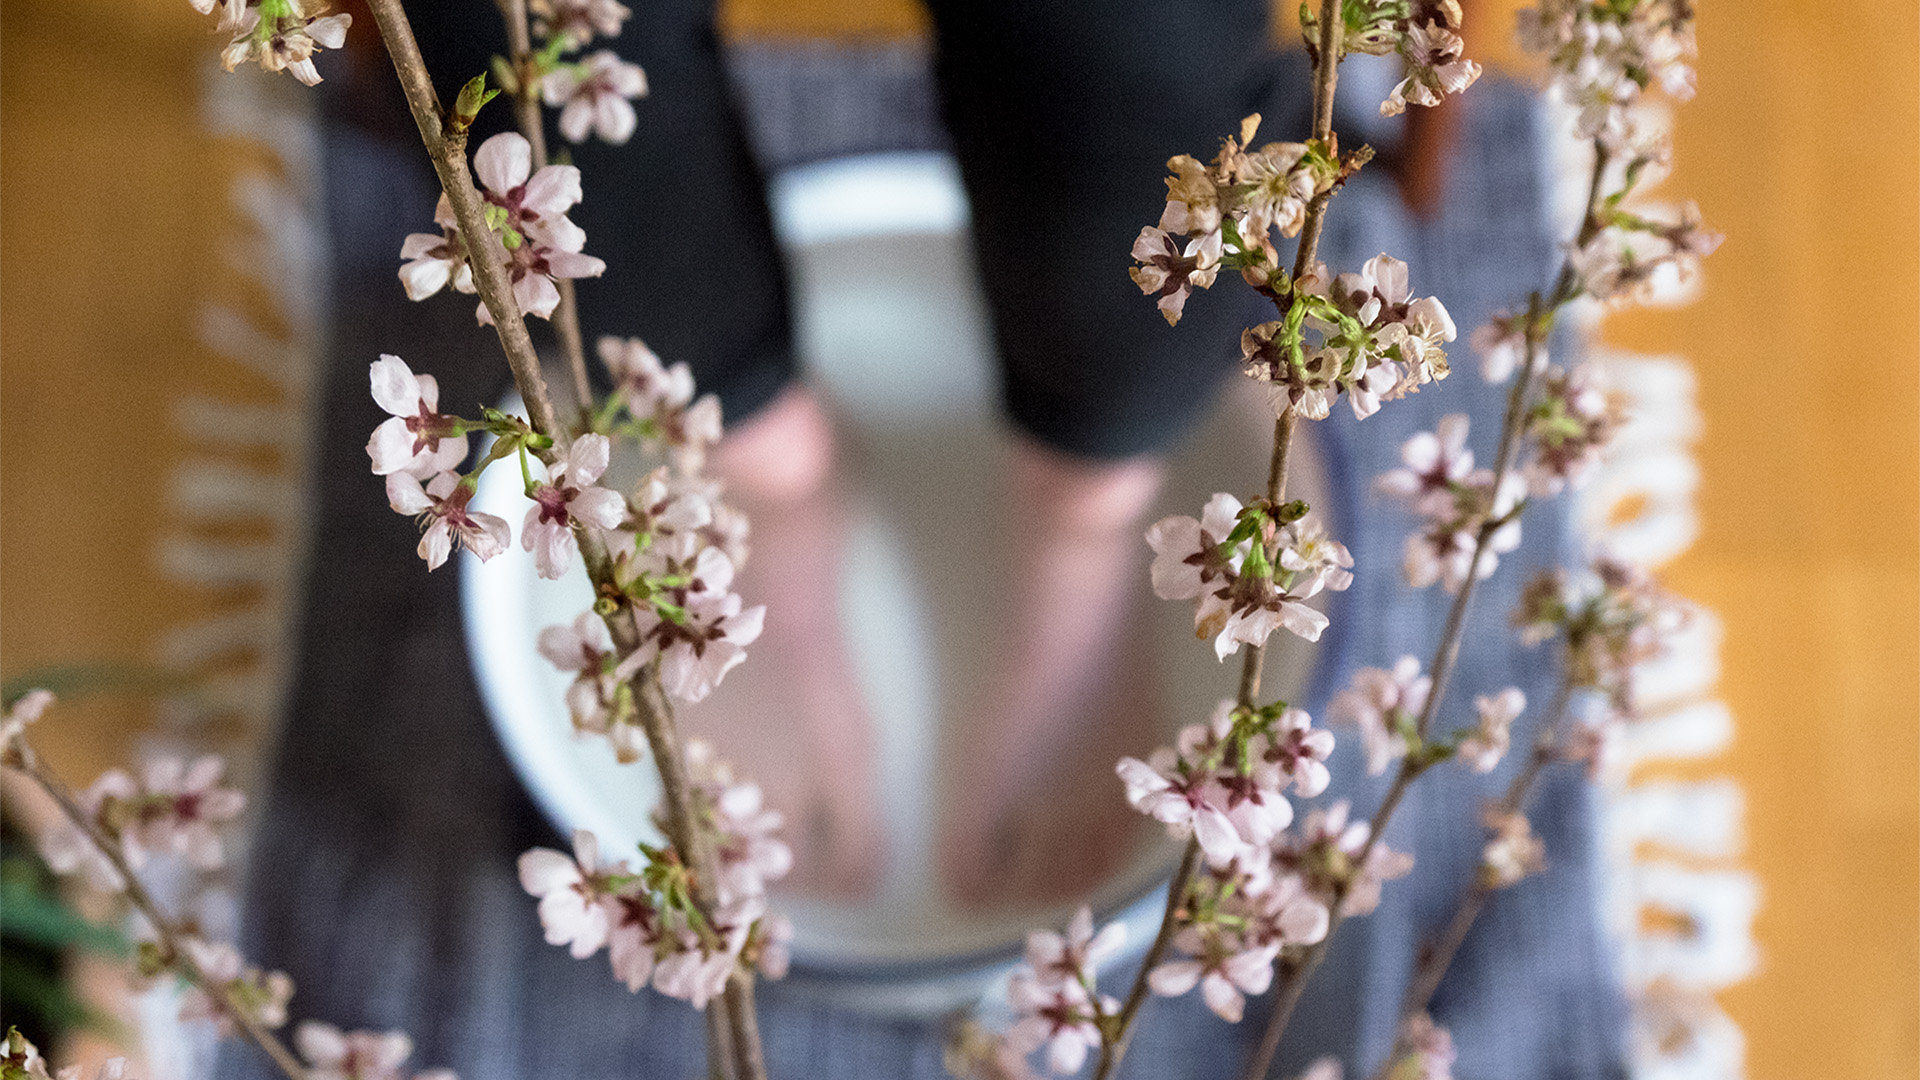 Ryoko Hori's Detoxing Footbath for Spring Detox with her Senses Salon and Foodadit